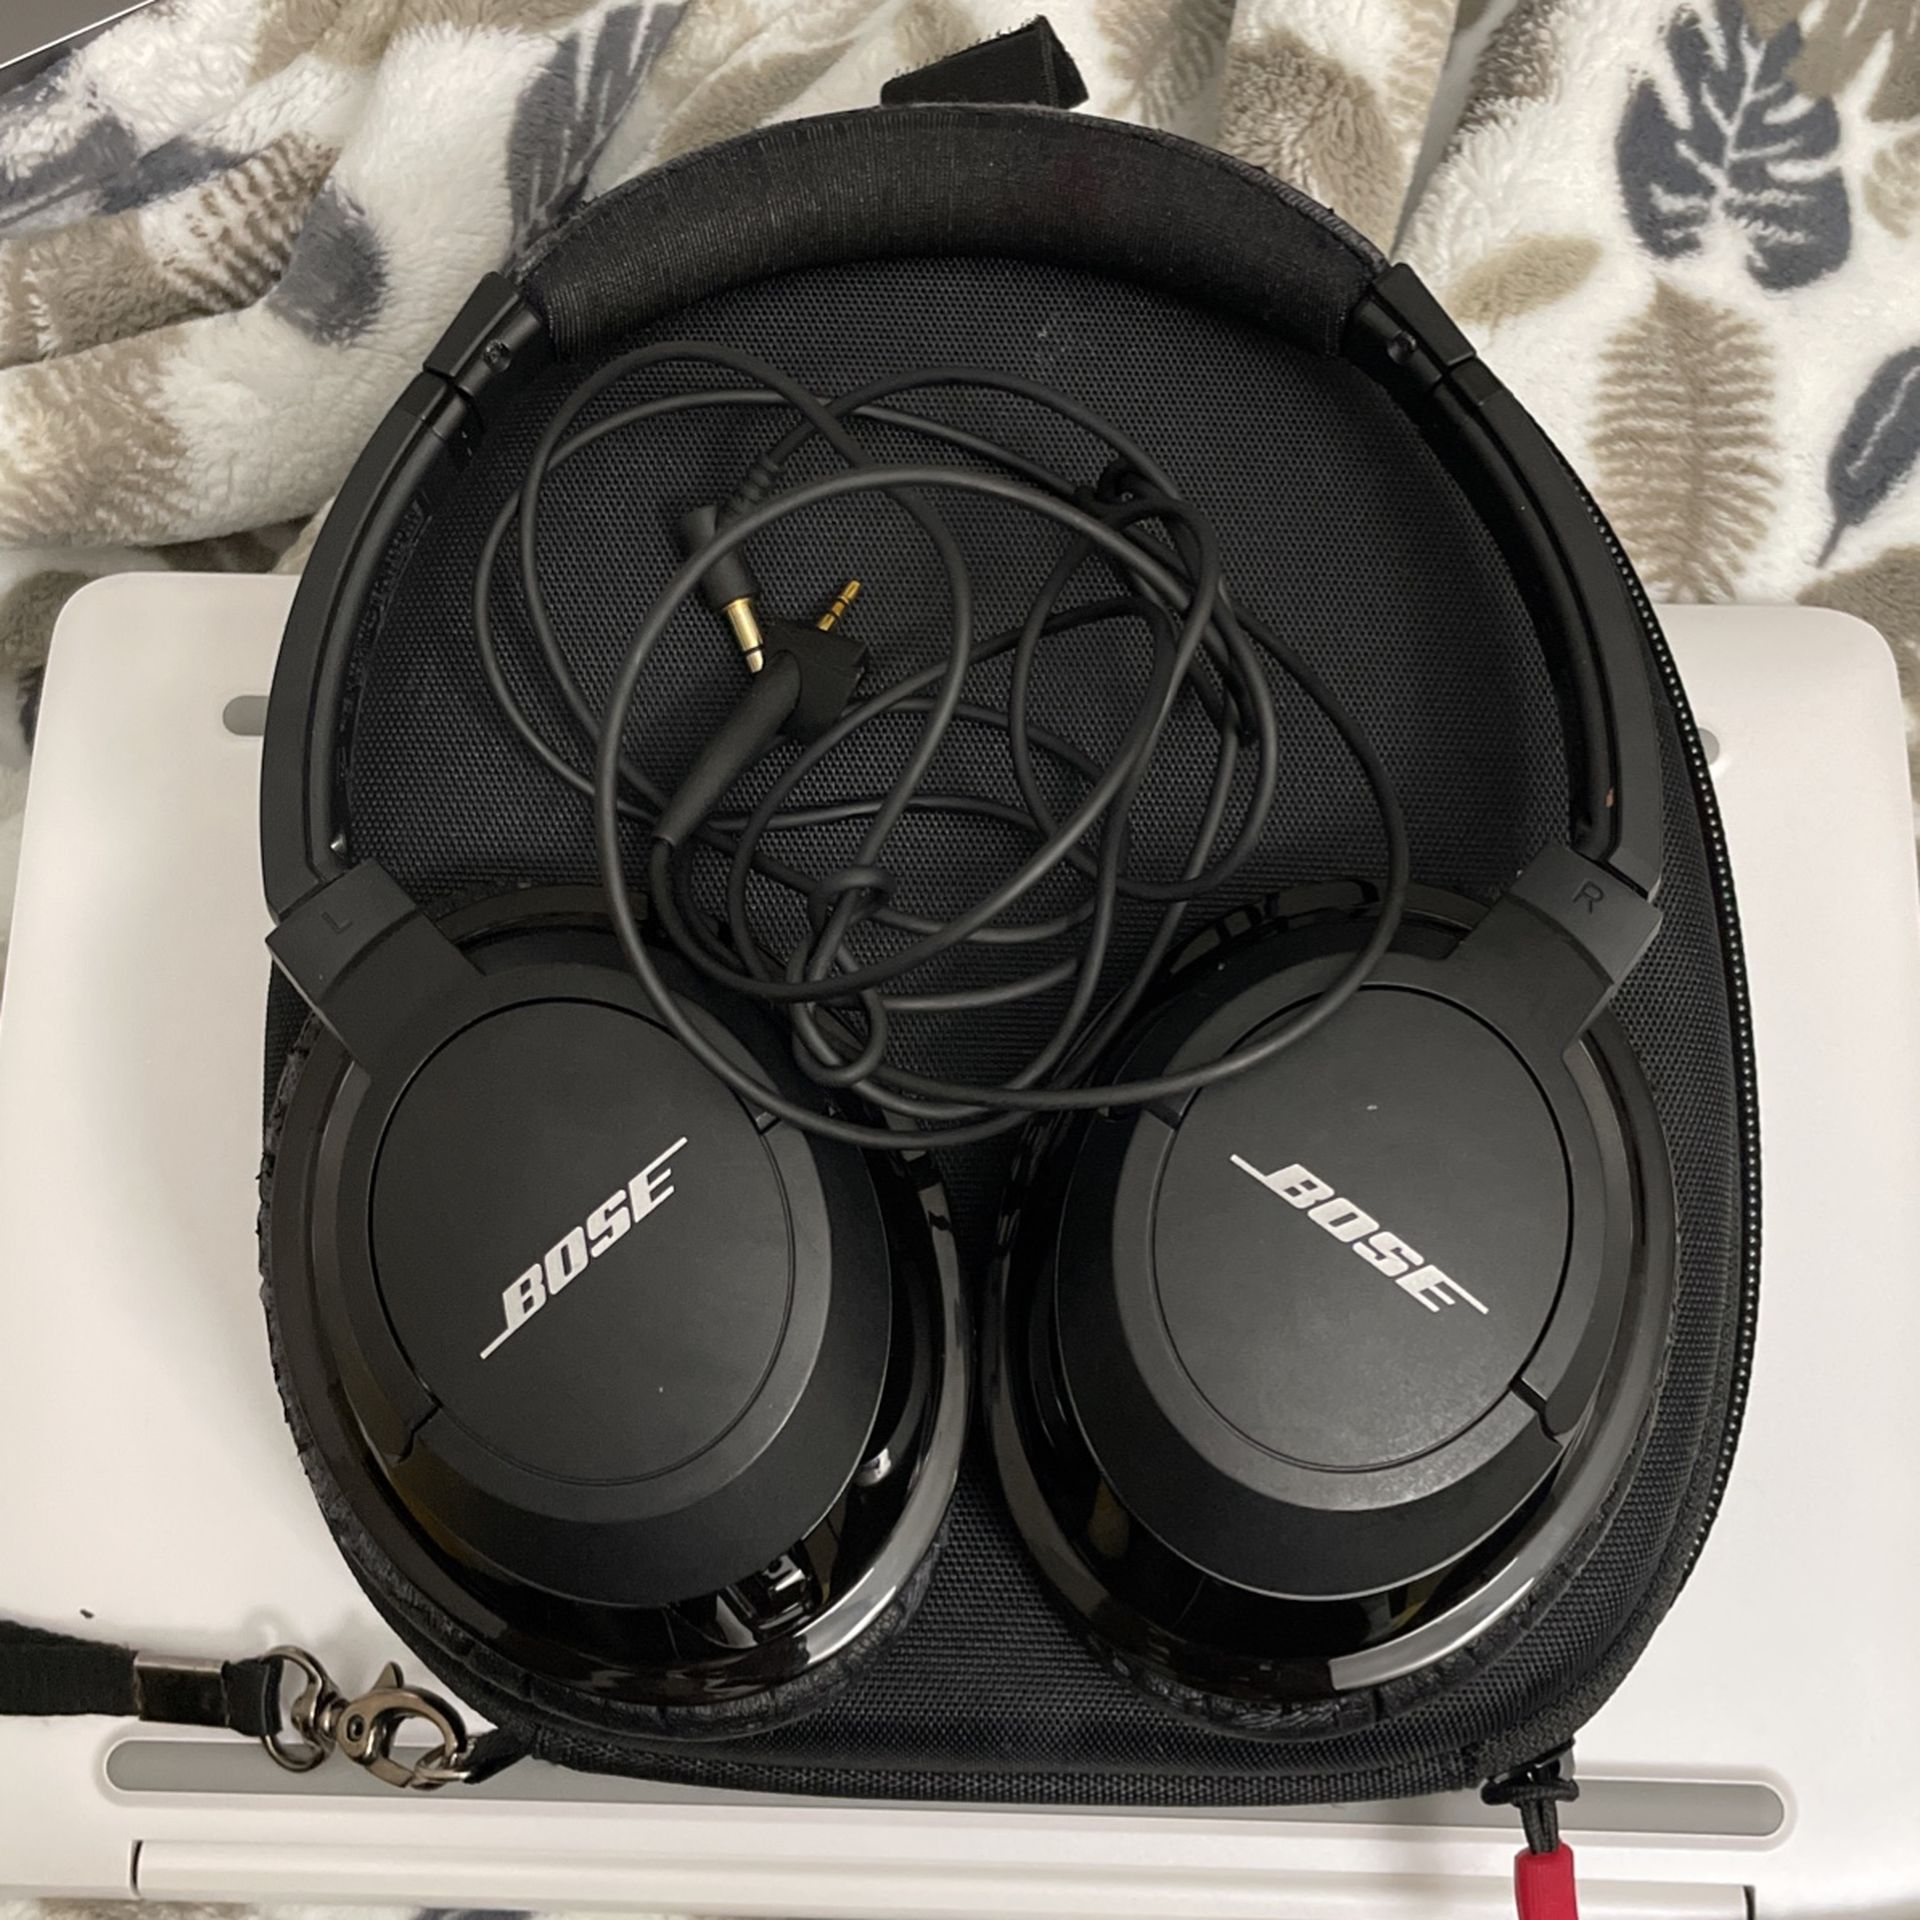 Bose Headphones For 60$